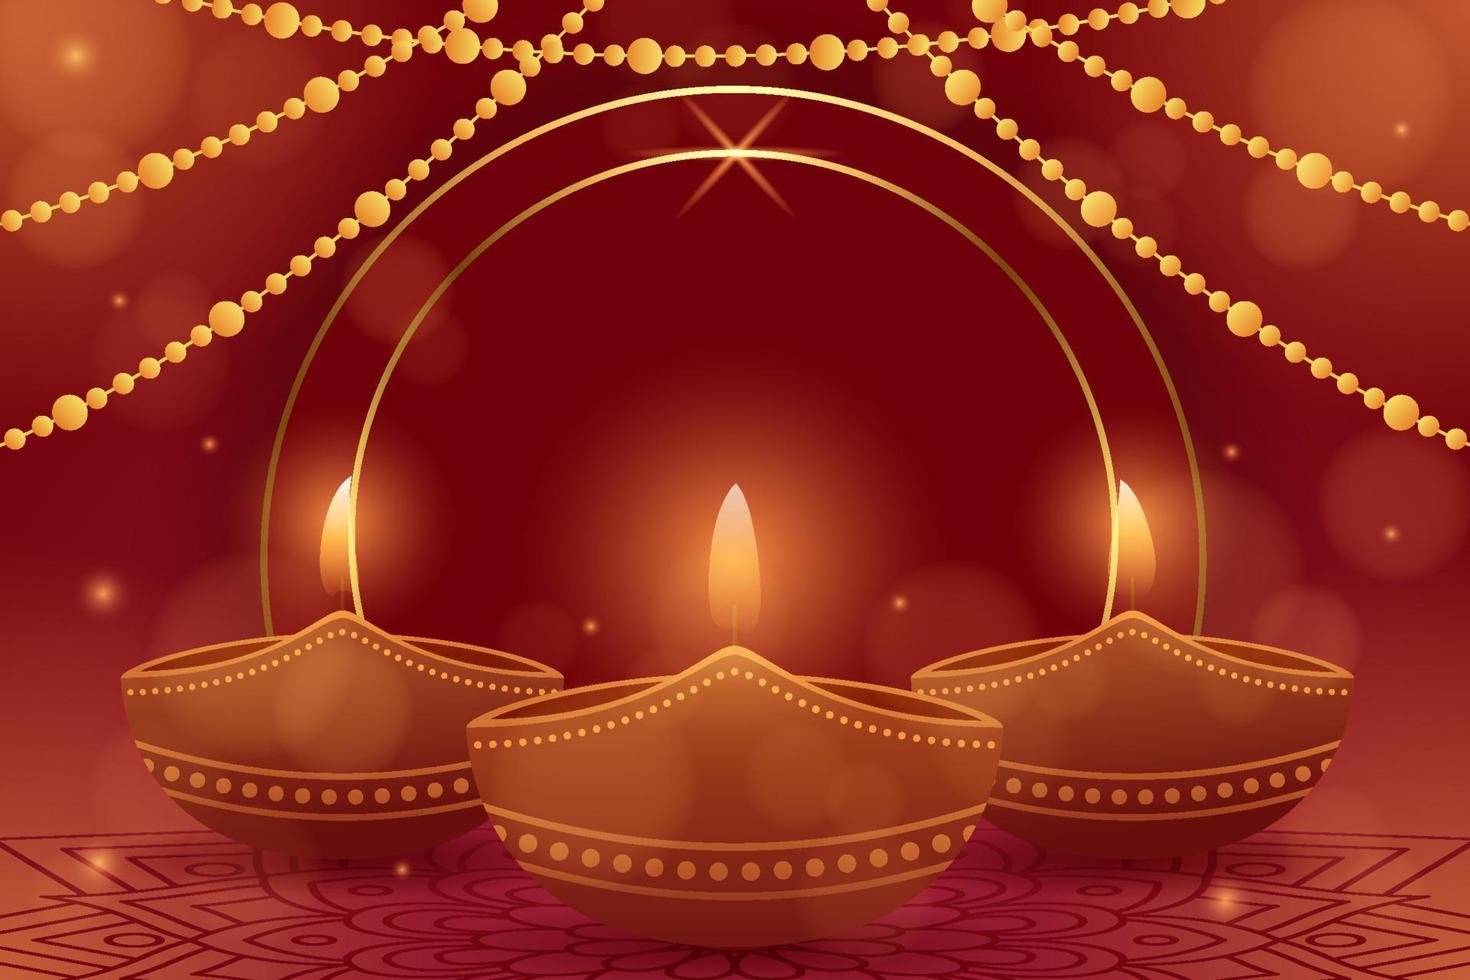 Diwali Festivity Background vector